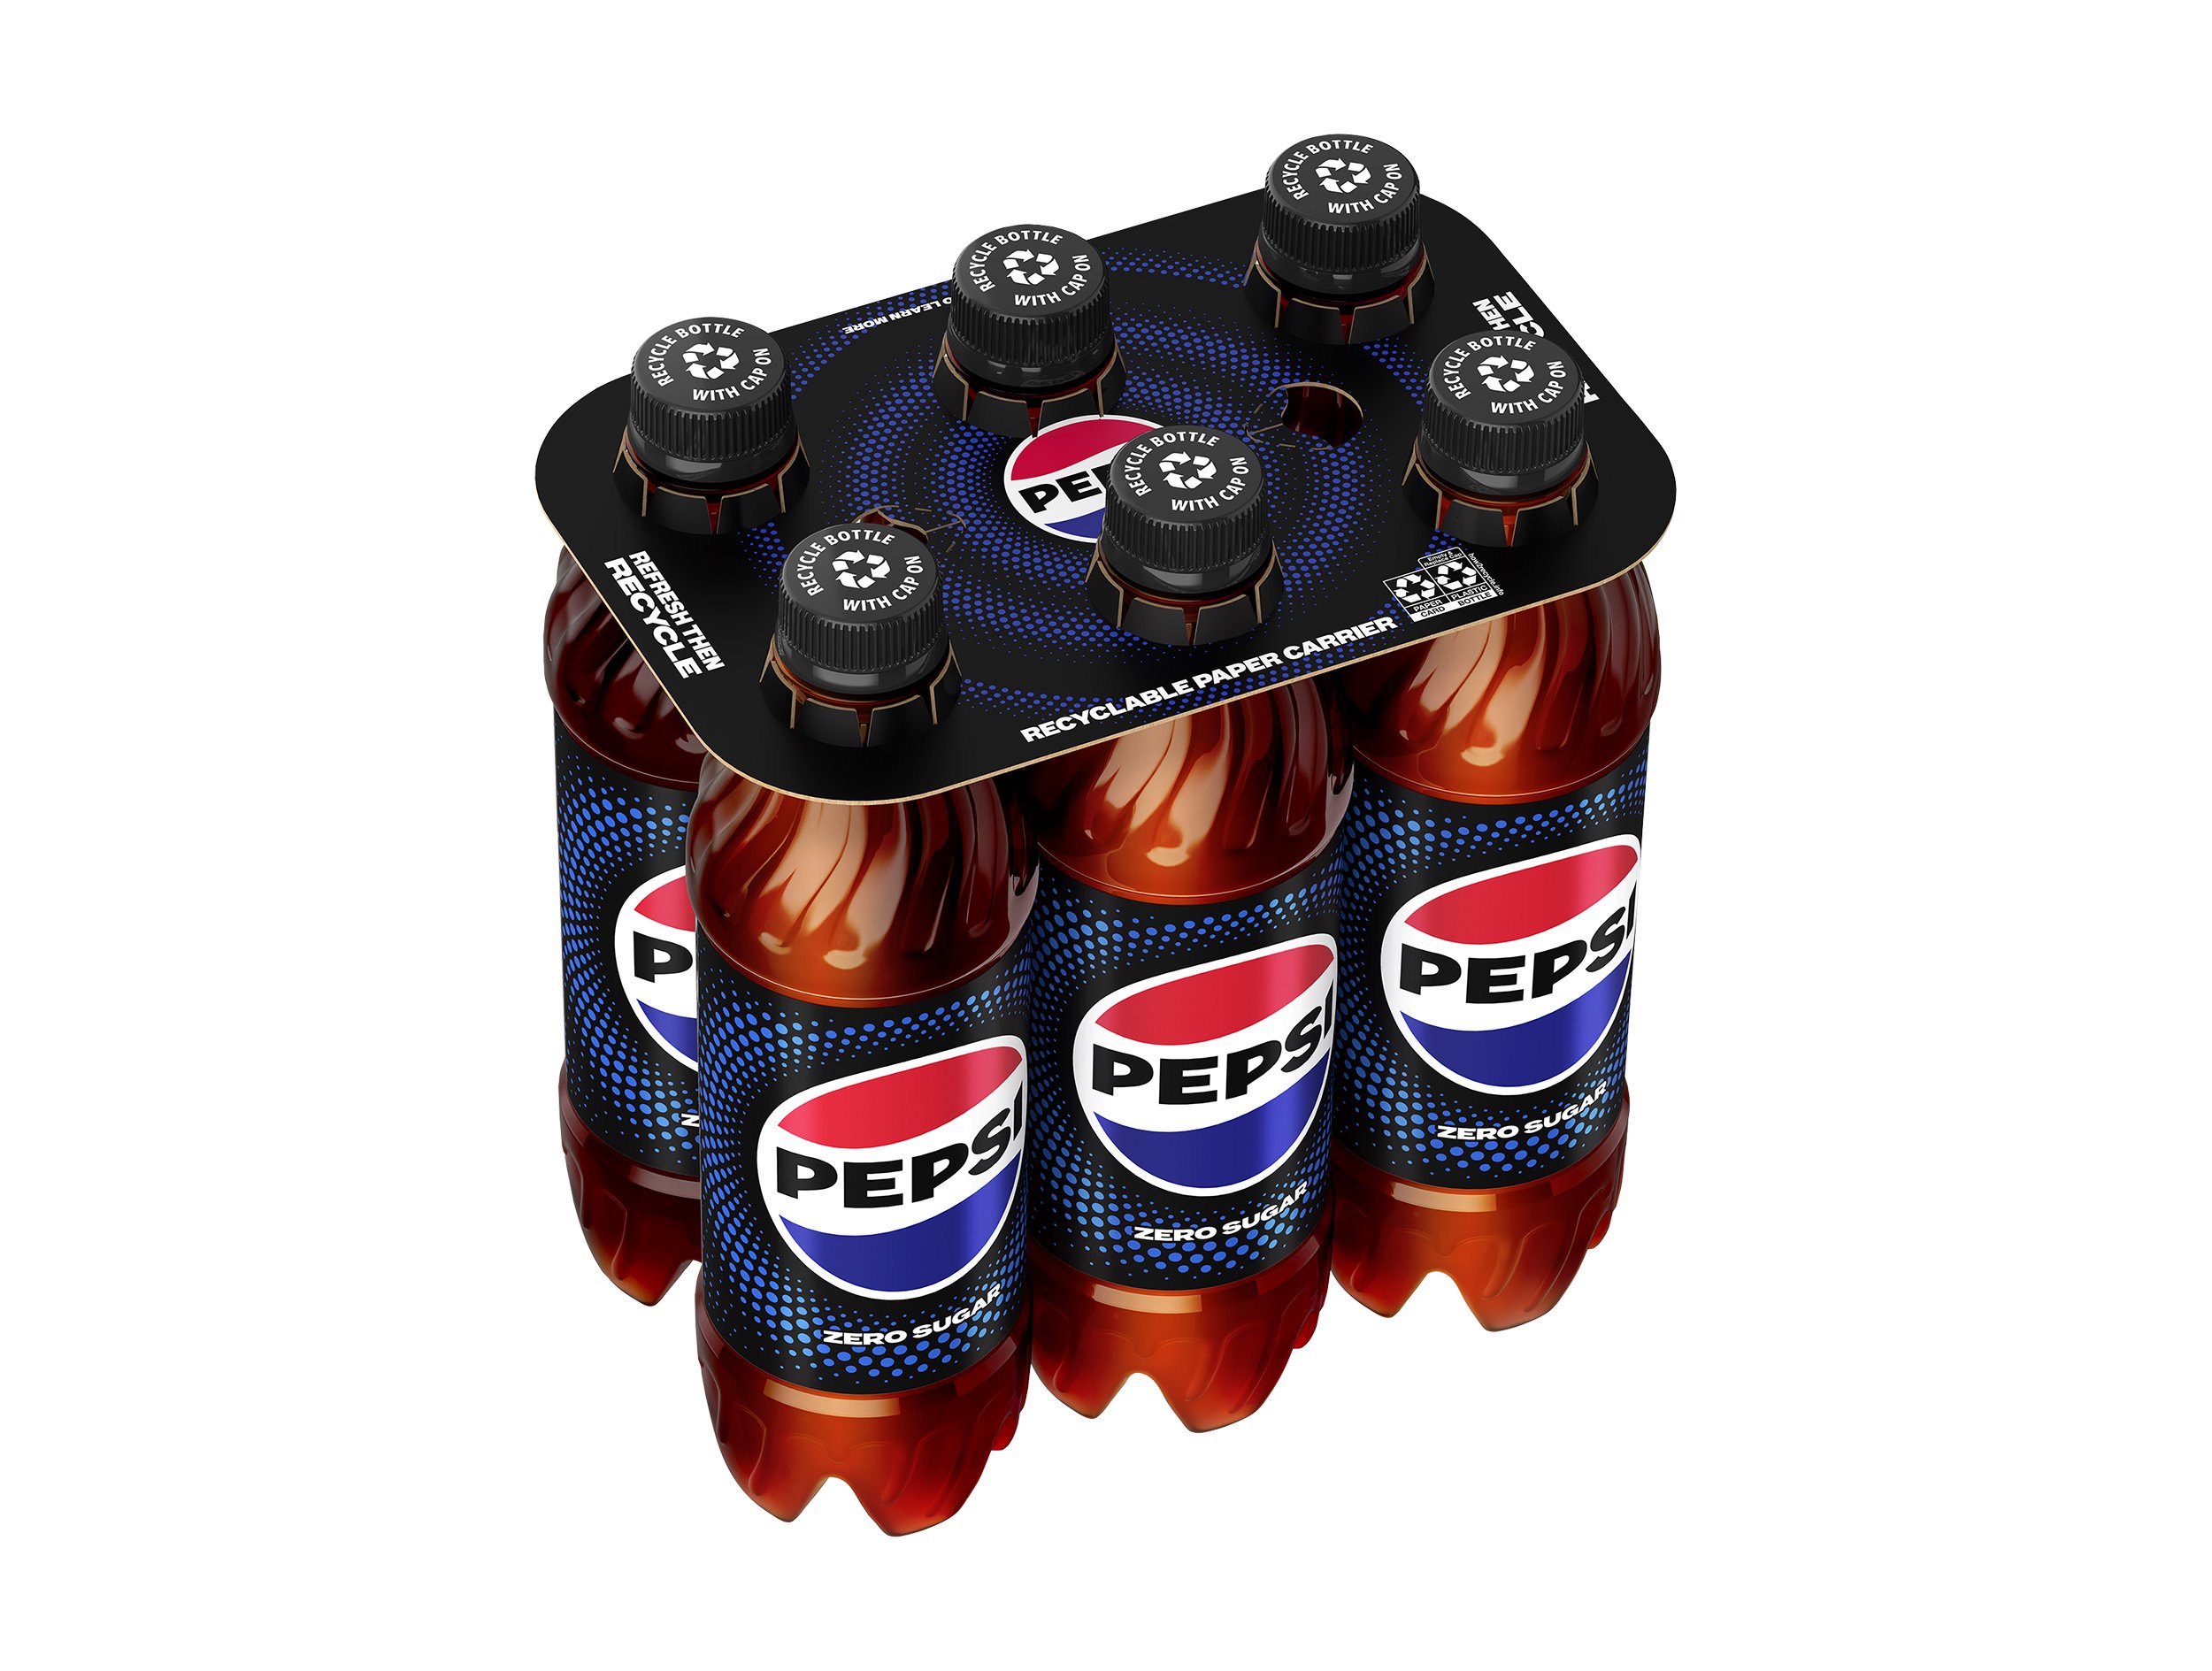 Pepsi zero-sugar packaging